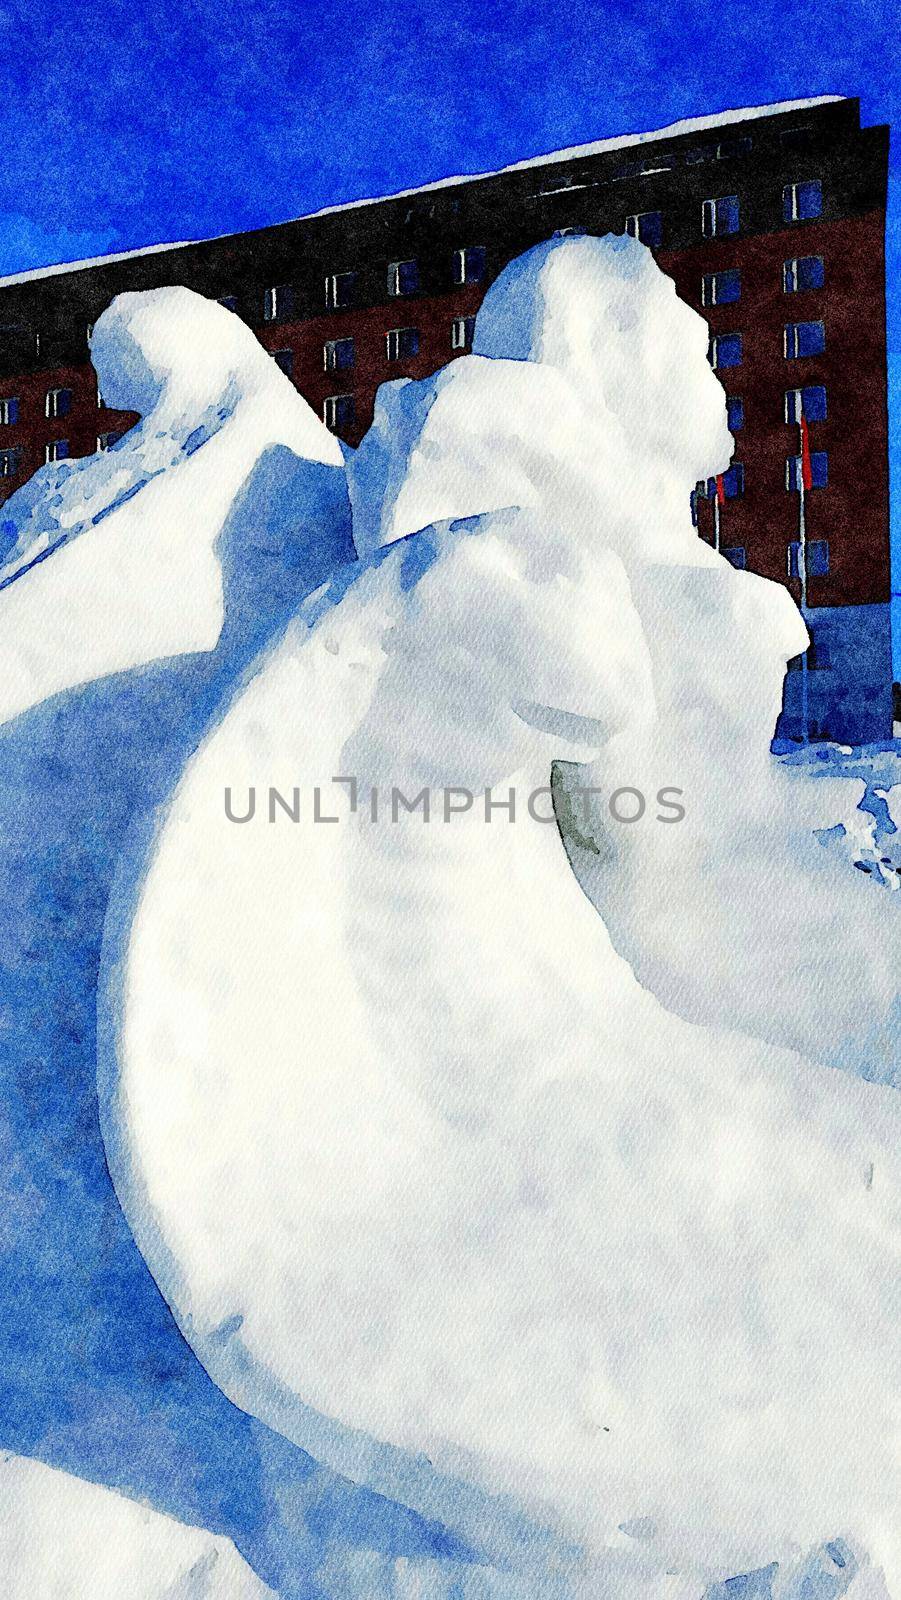 Kiruna, Sweden, February 25, 2020. Watercolor representing ice sculptures in the public park of the city of Kiruna